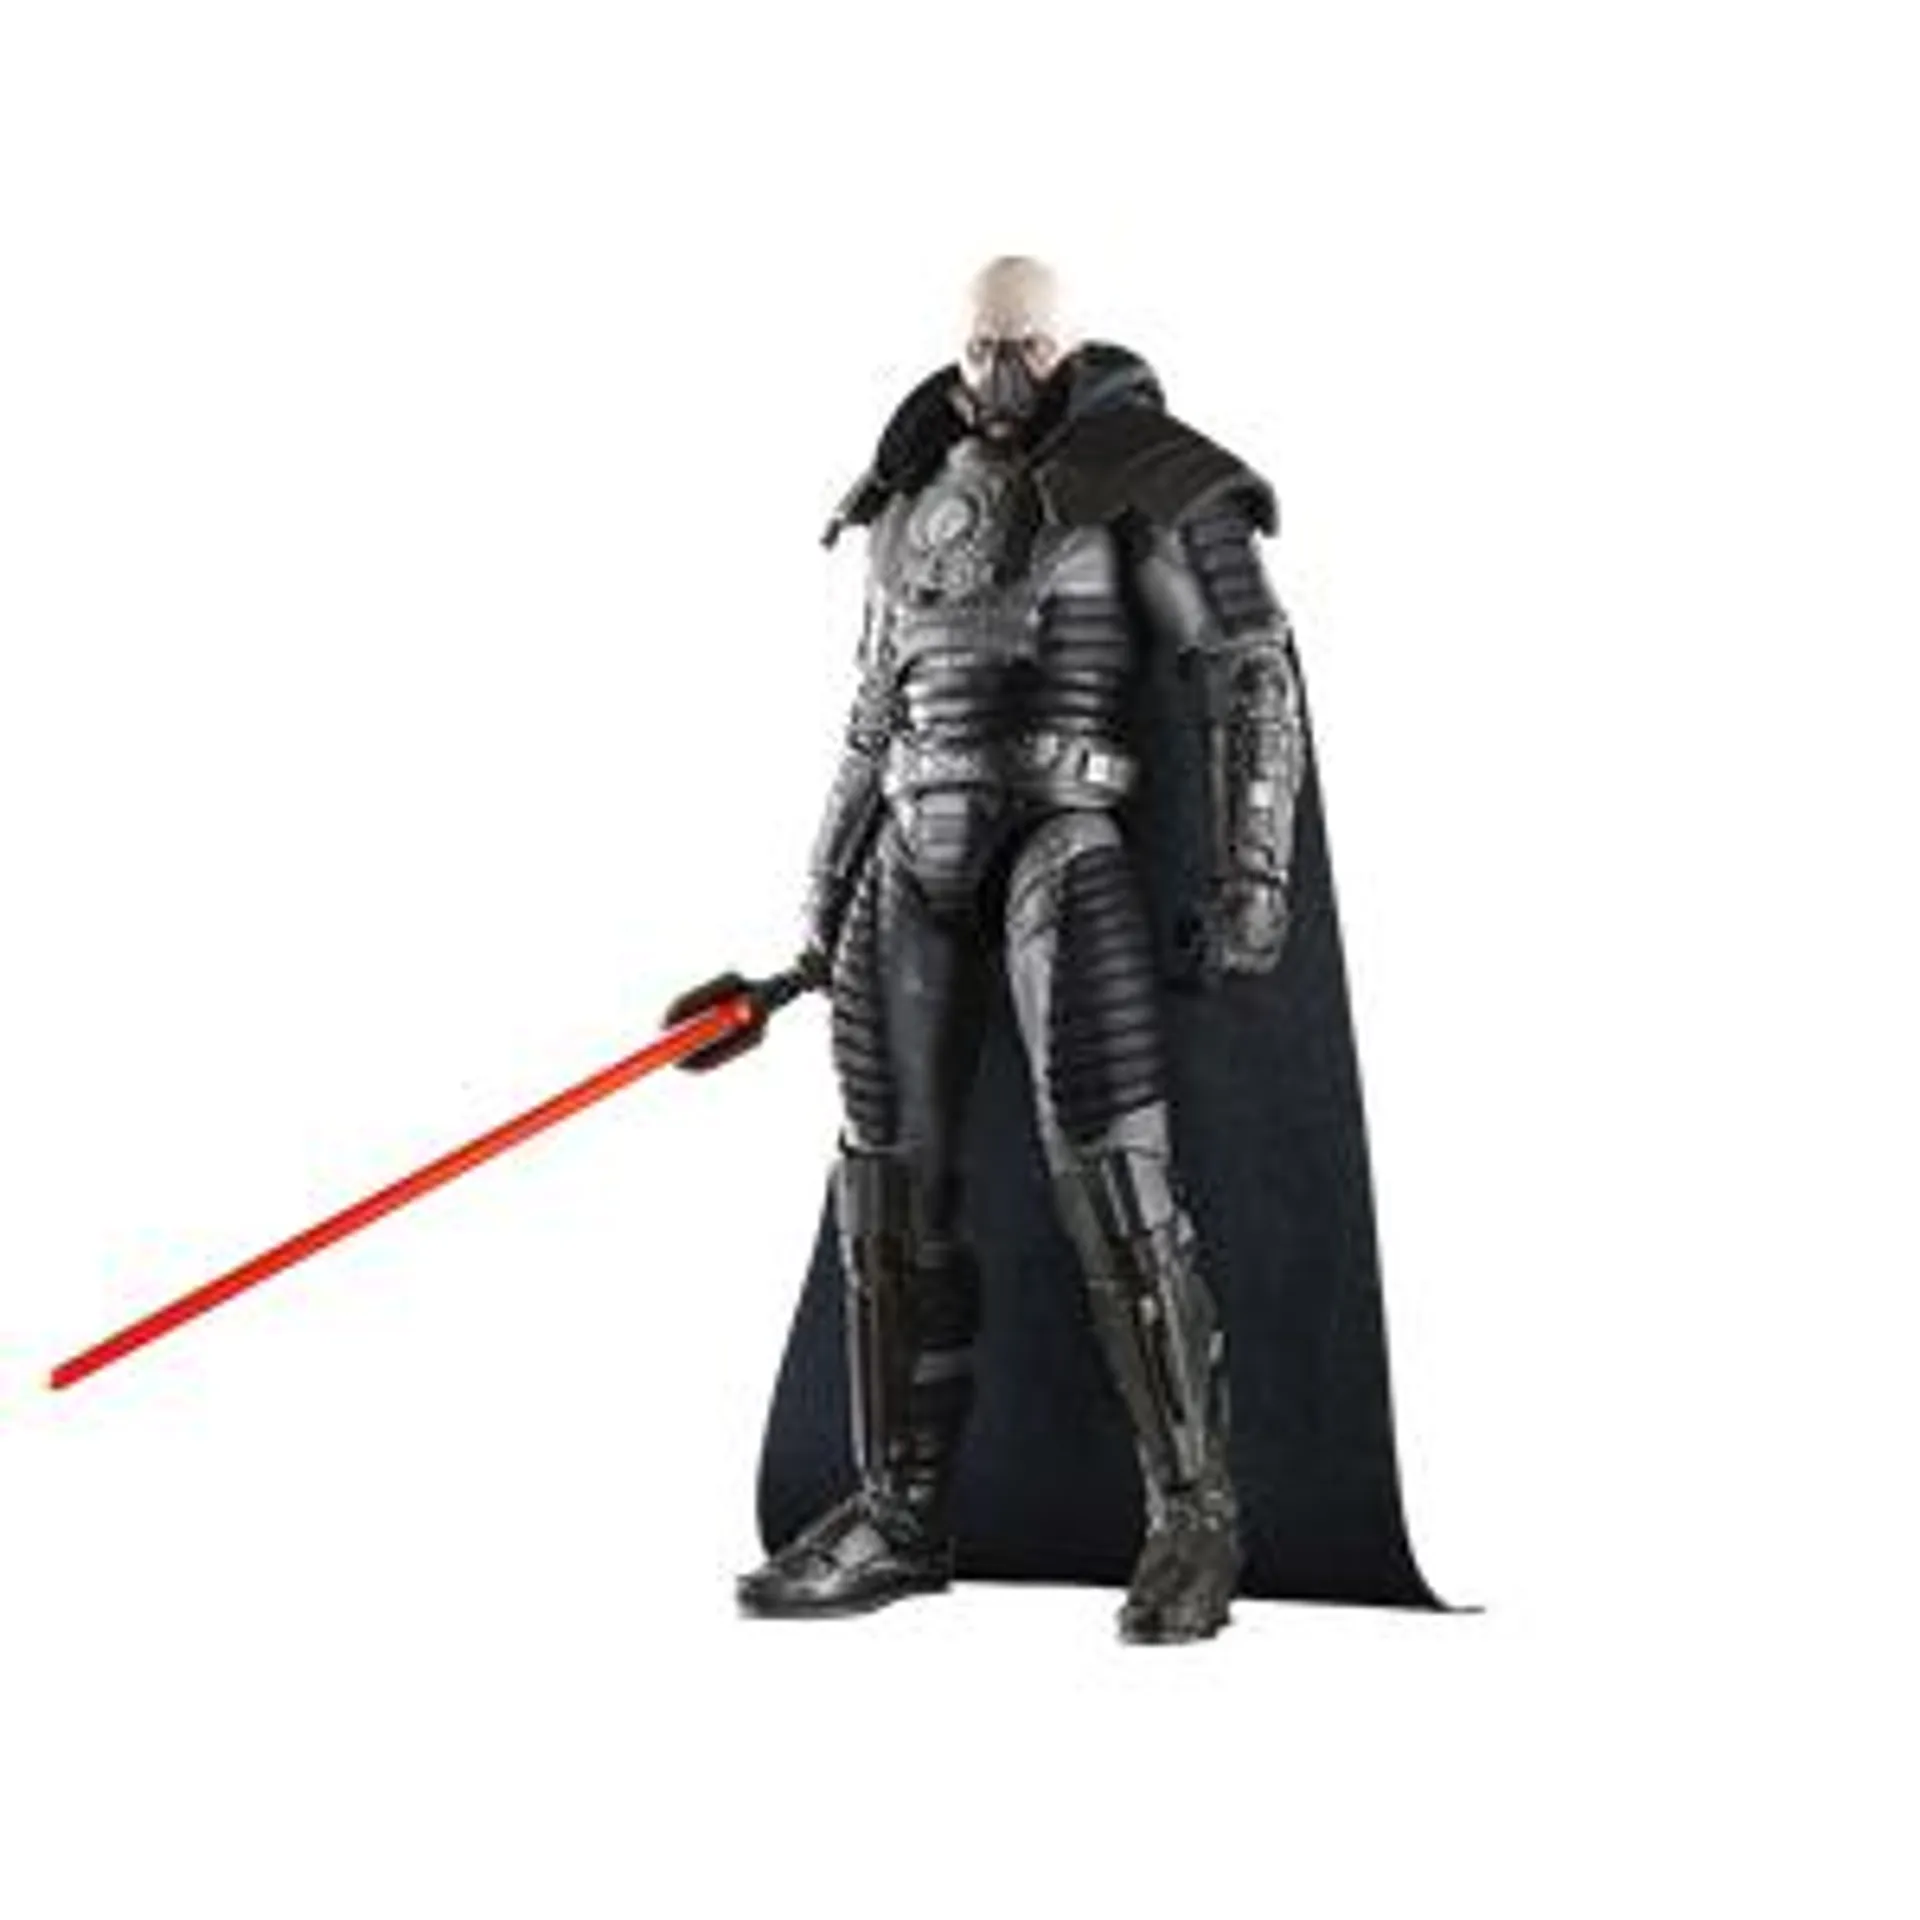 Star Wars: The Old Republic: Black Series Deluxe Action Figure: Darth Malgus